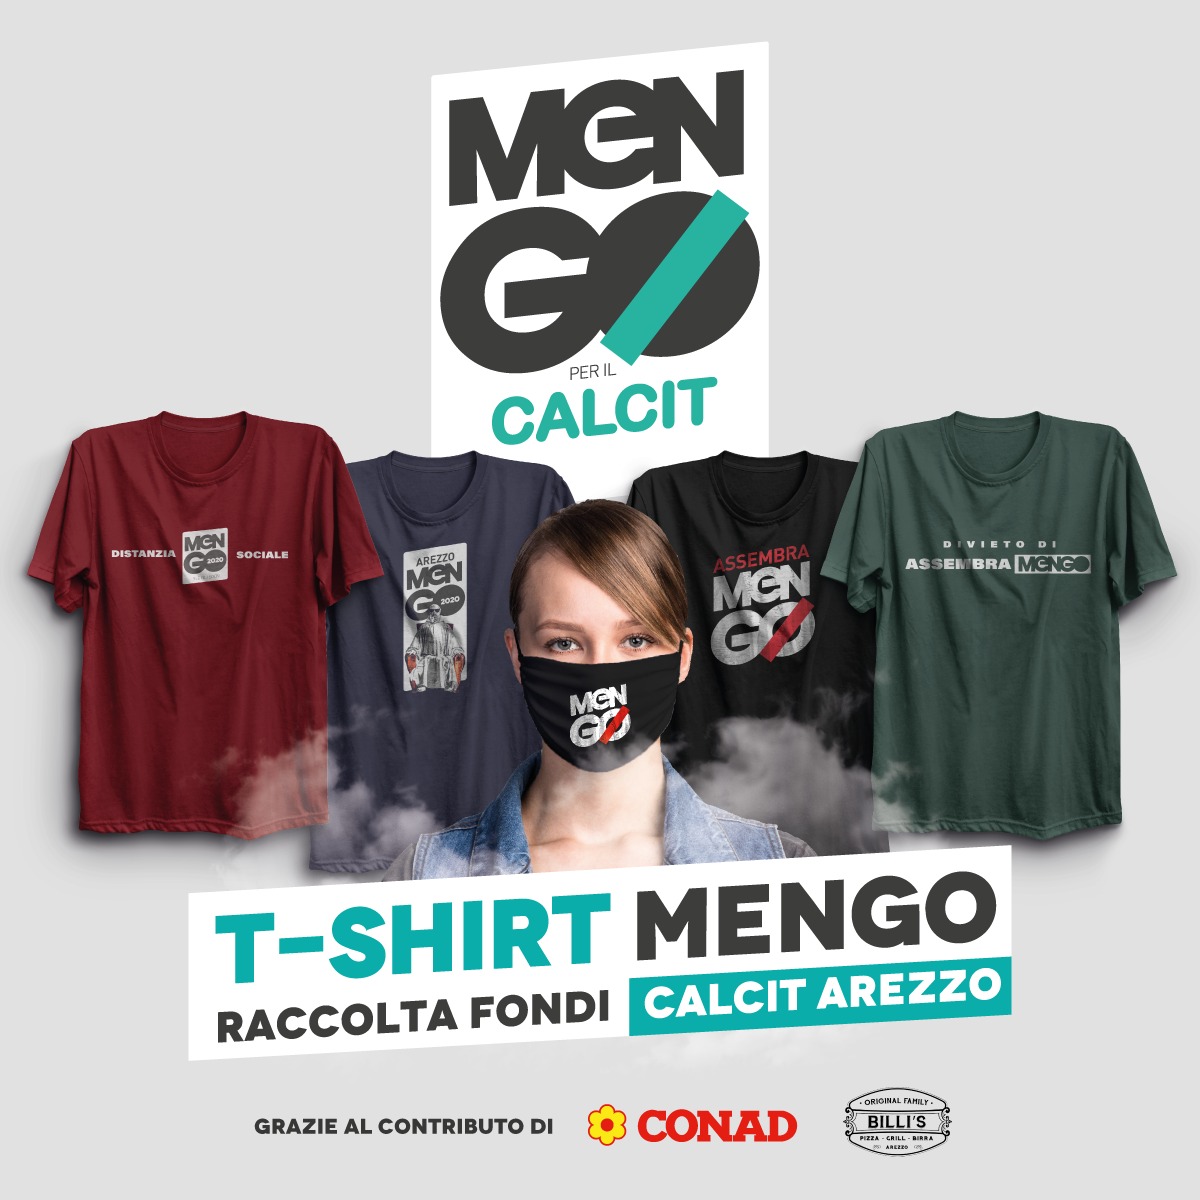 Parte la raccolta fondi “MEN/GO per il Calcit”, magliette e mascherine targate MEN/GO per i donatori